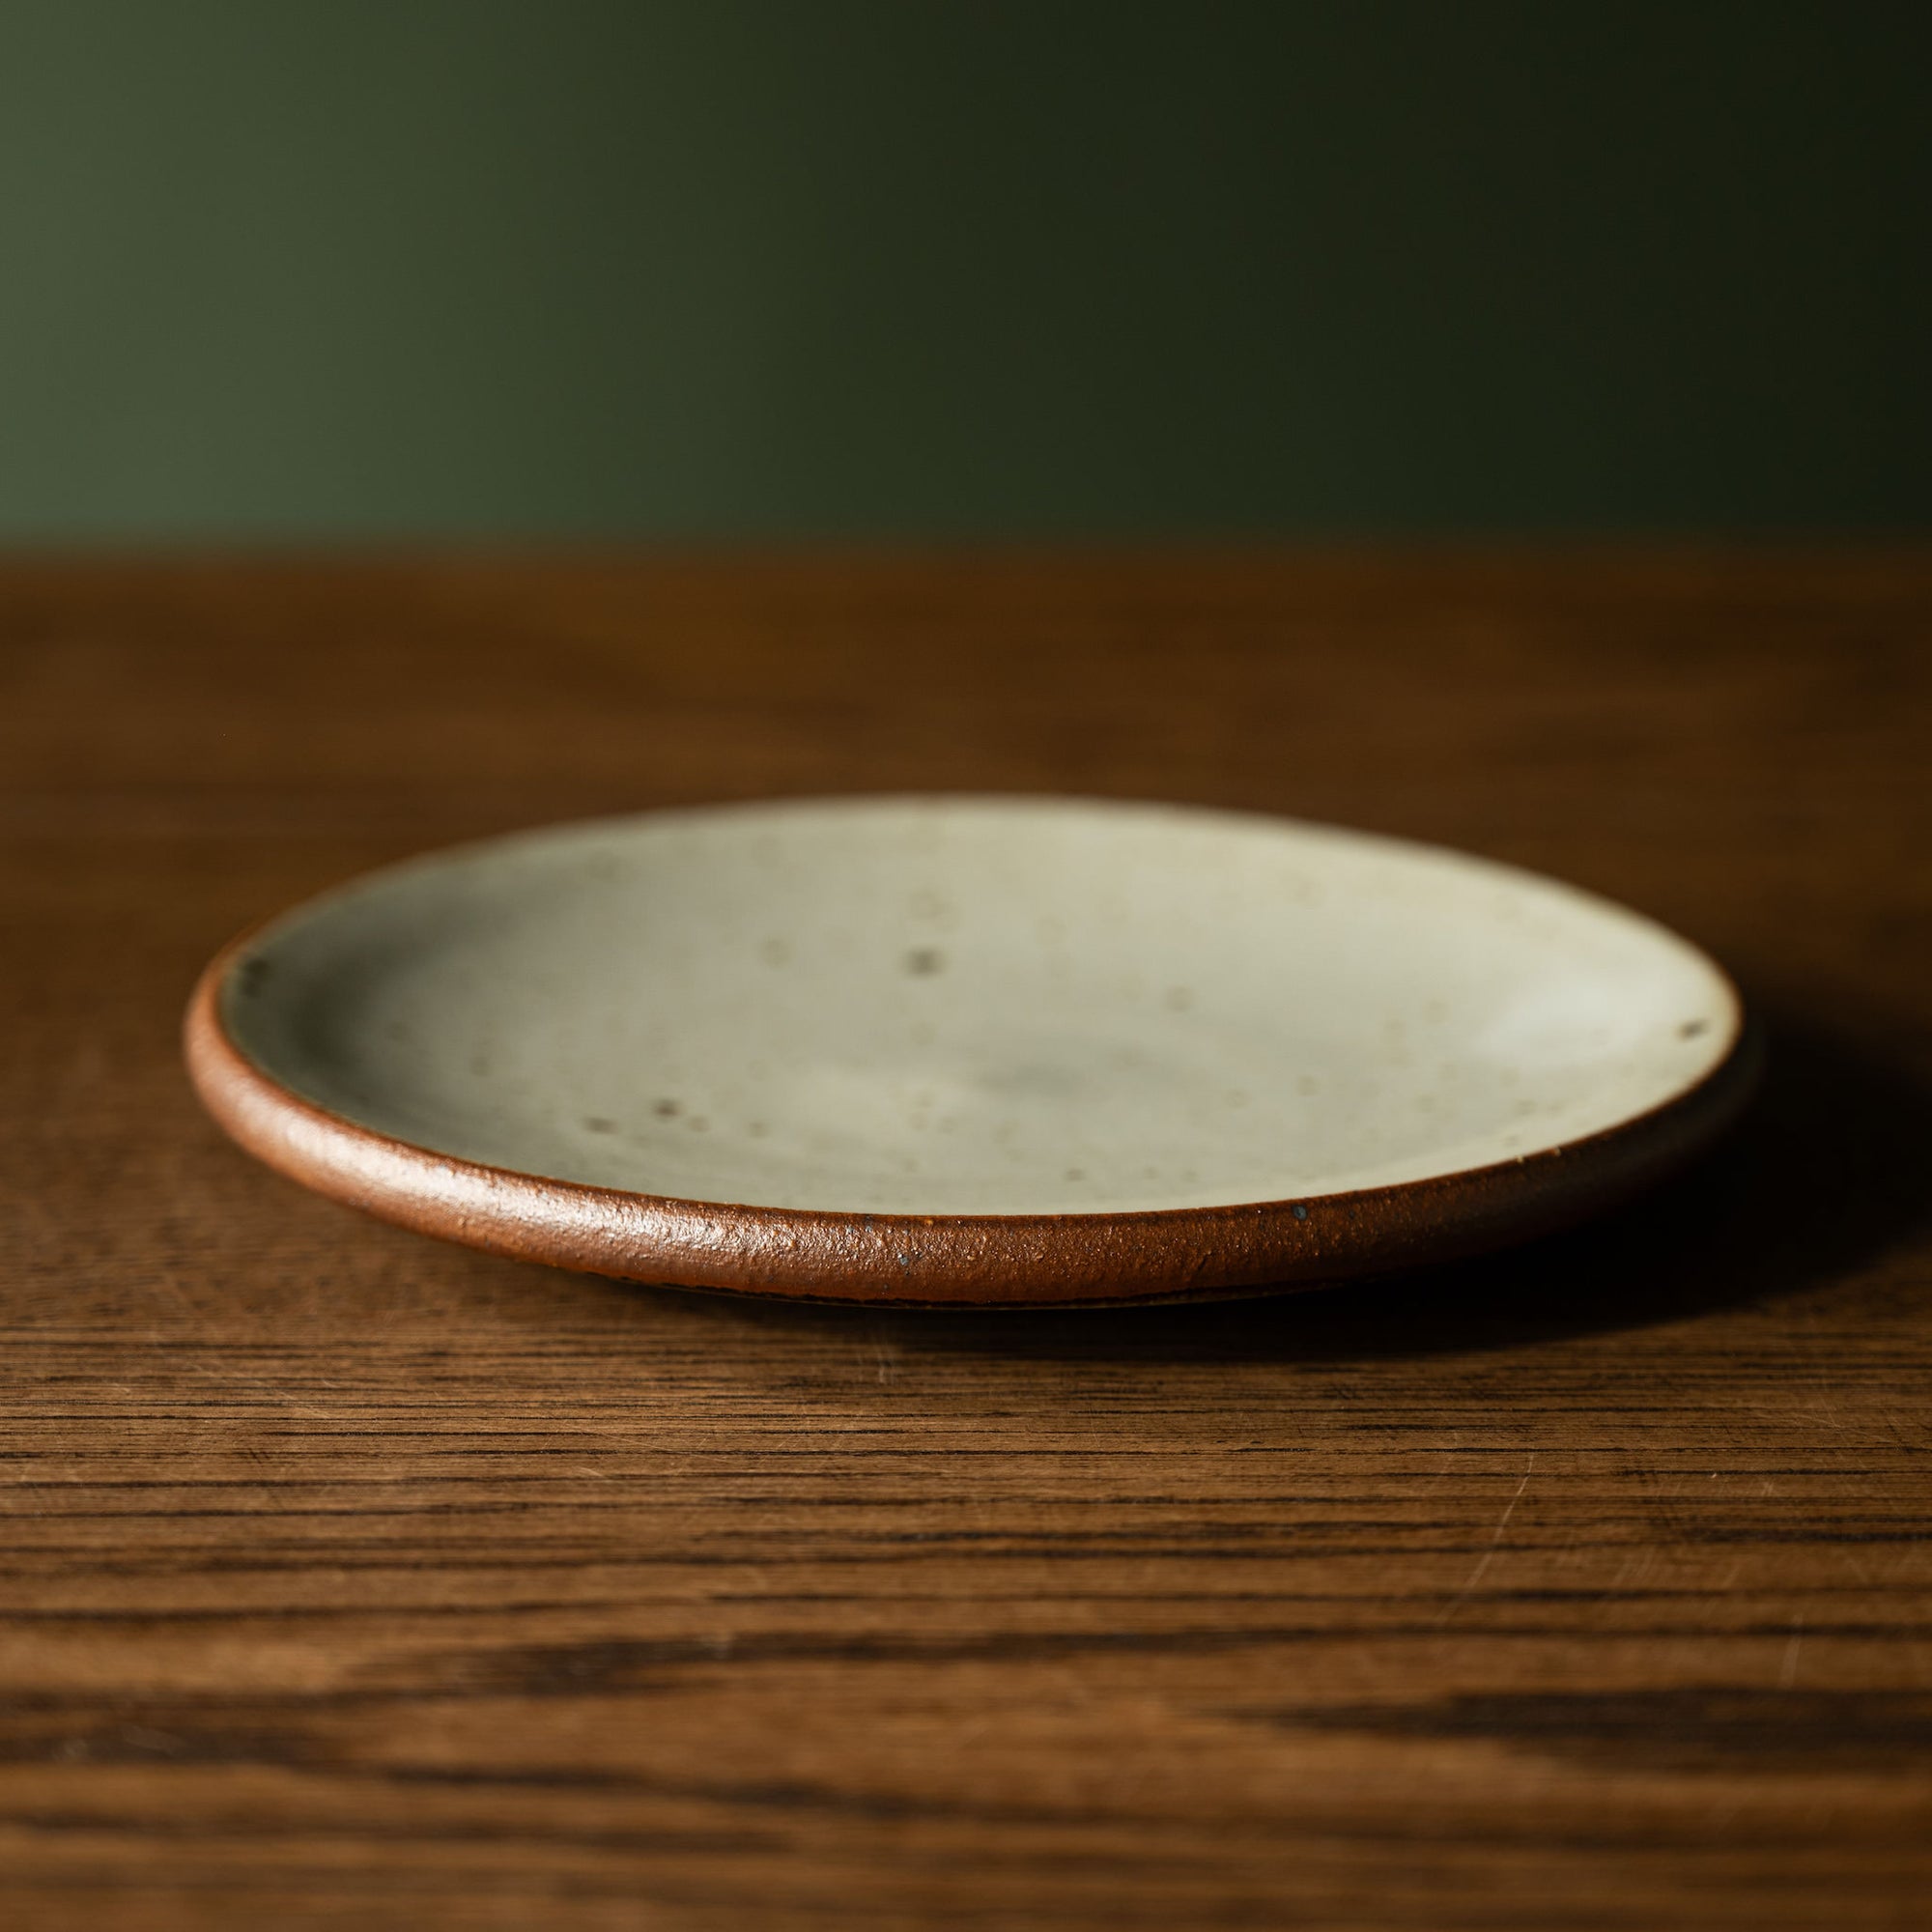 Leach Pottery Standard Ware Dessert Plate in Dolomite glaze